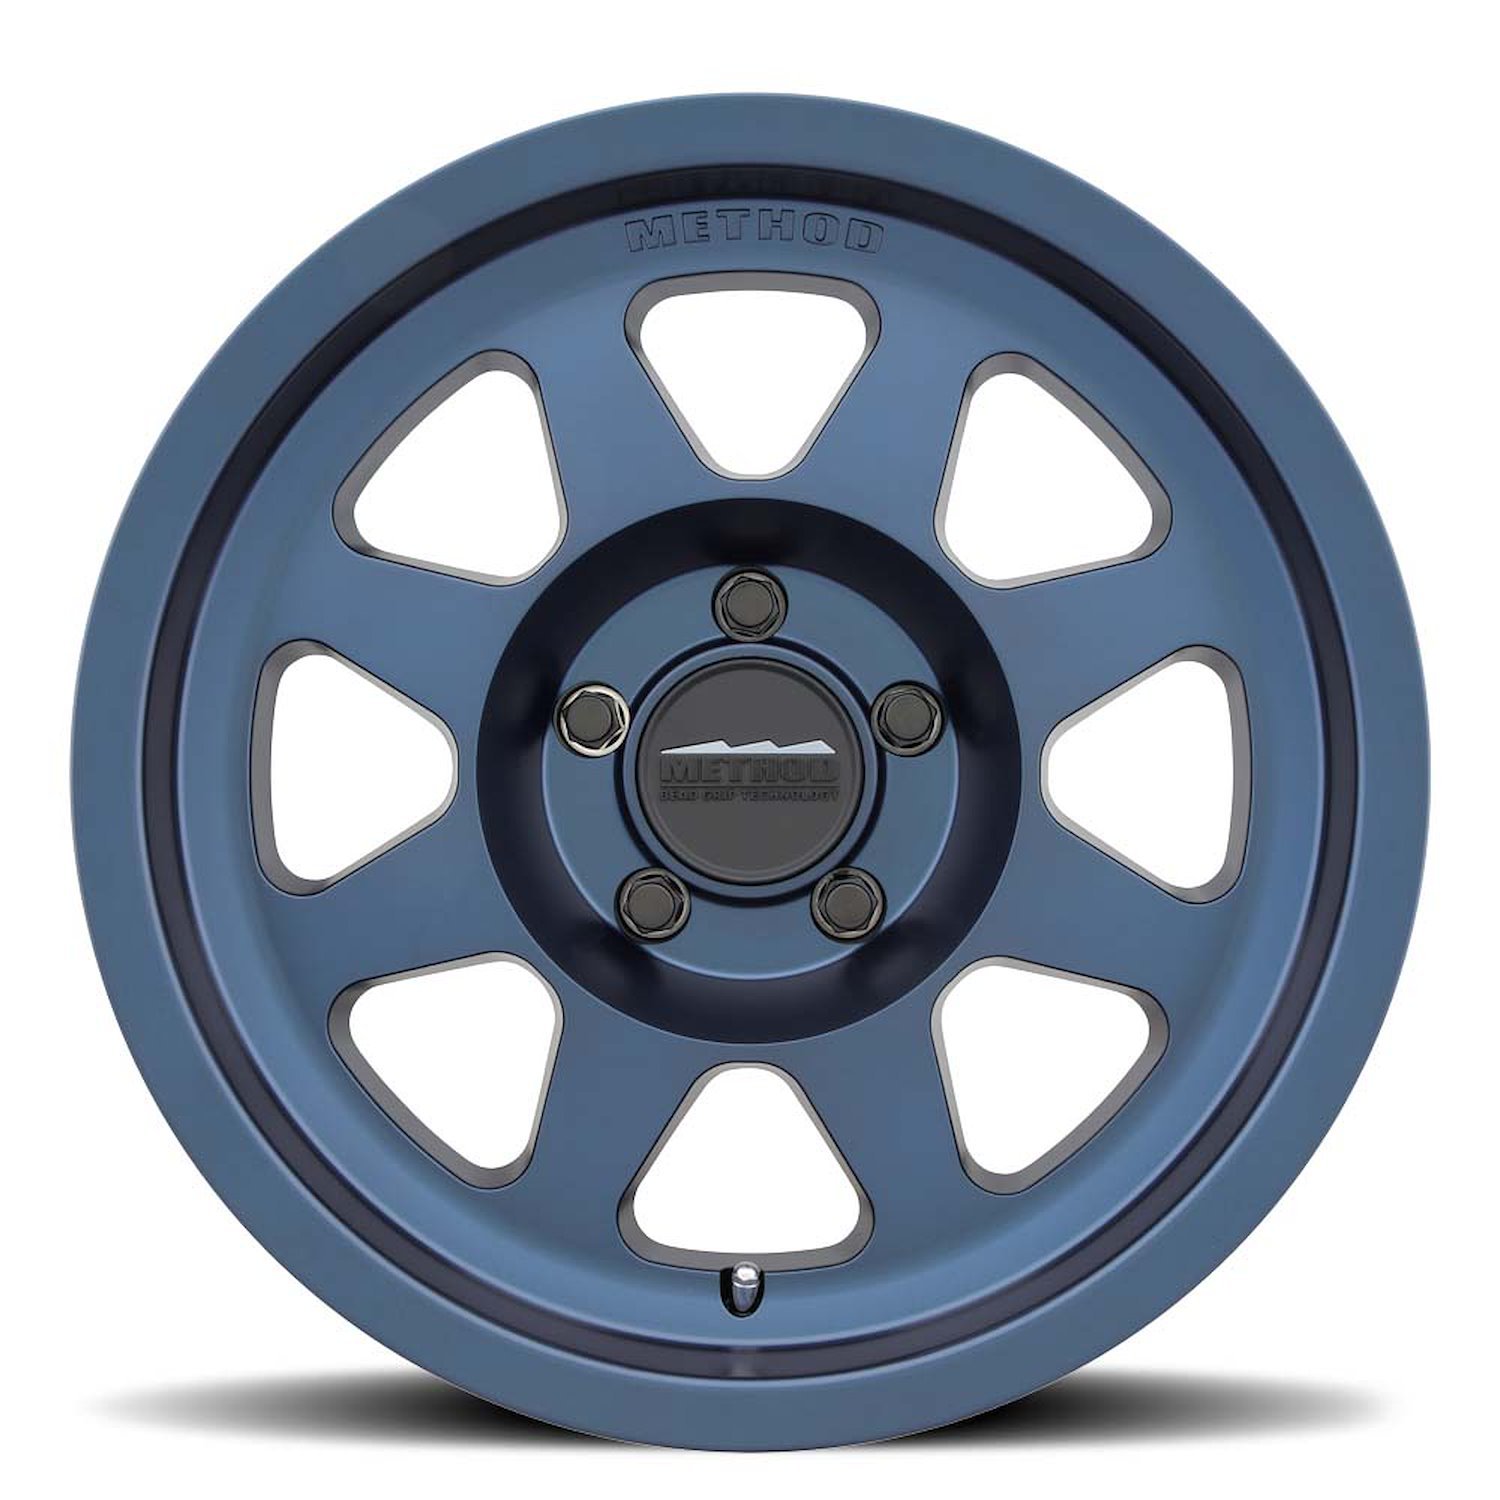 MR70179050612N TRAIL MR701 Bead Grip Wheel [Size: 17" x 9"] Bahia Blue